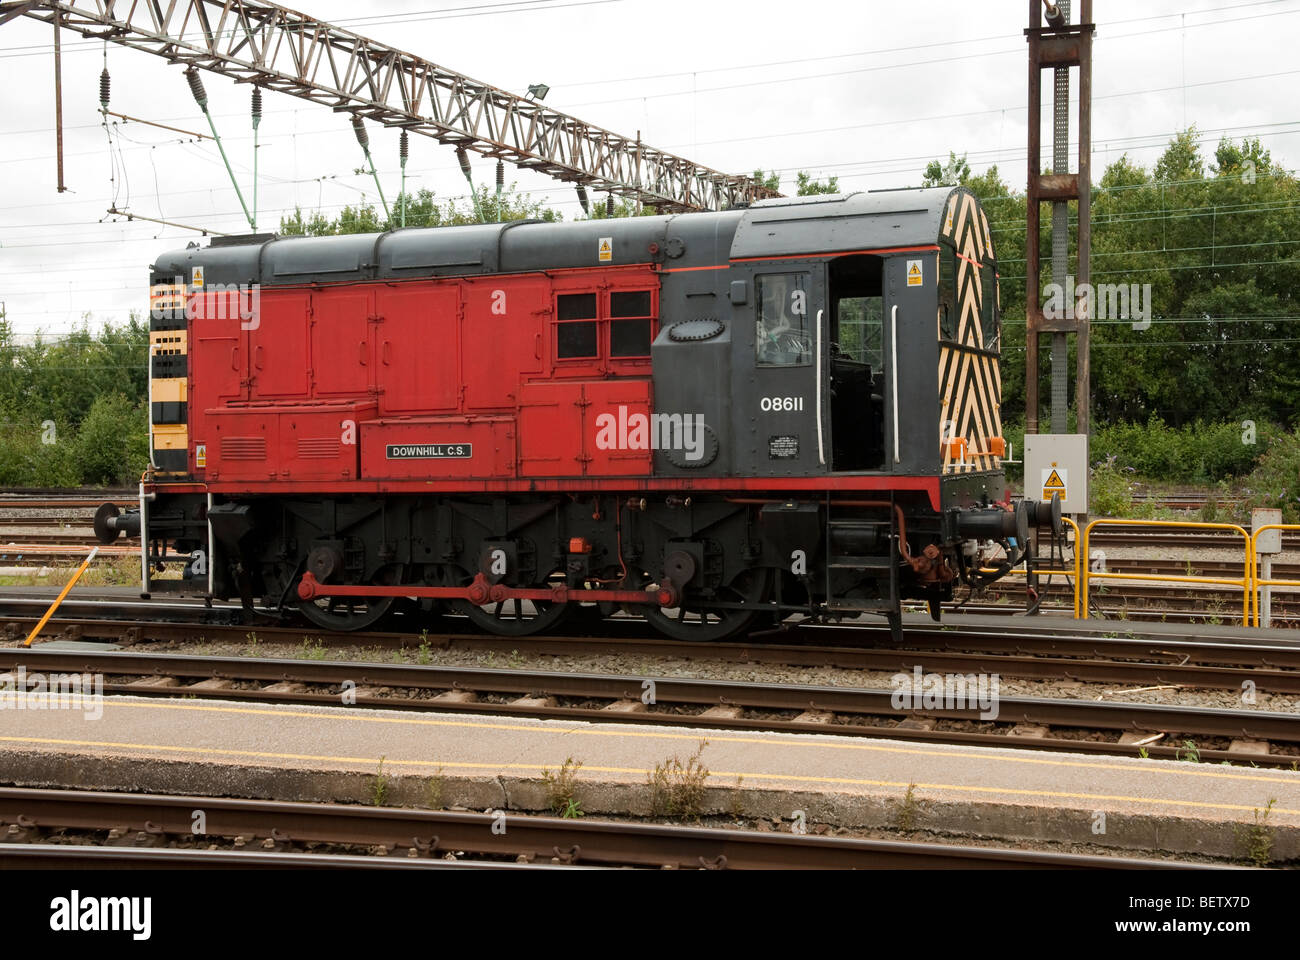 Red diesel locomotive 08611 Downhill CS Stock Photo